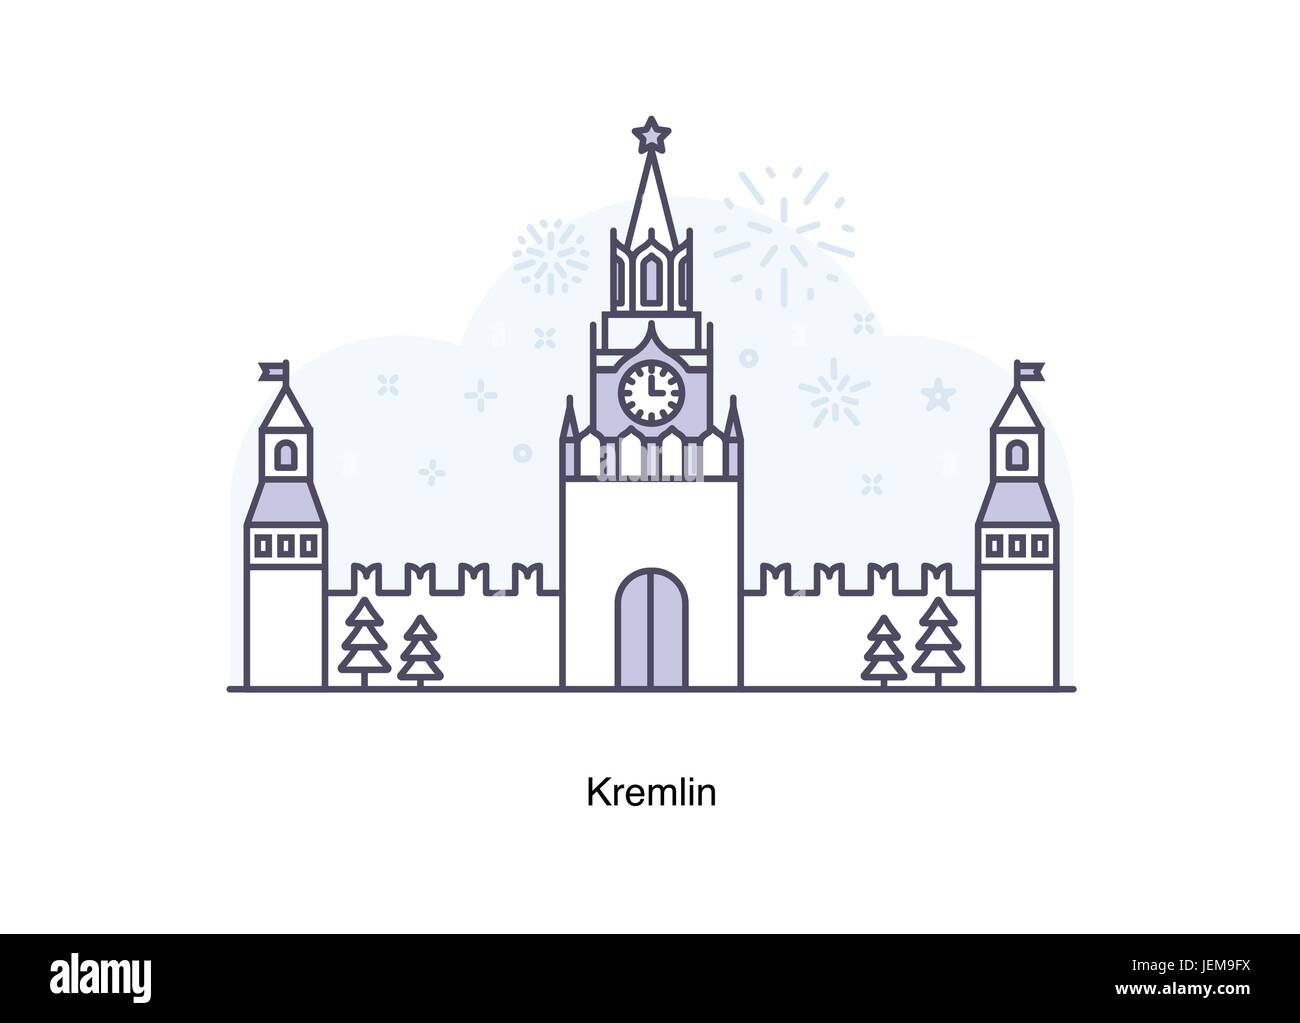 Vektorgrafik-Linie des Kreml, Moskau, Russland Stock Vektor